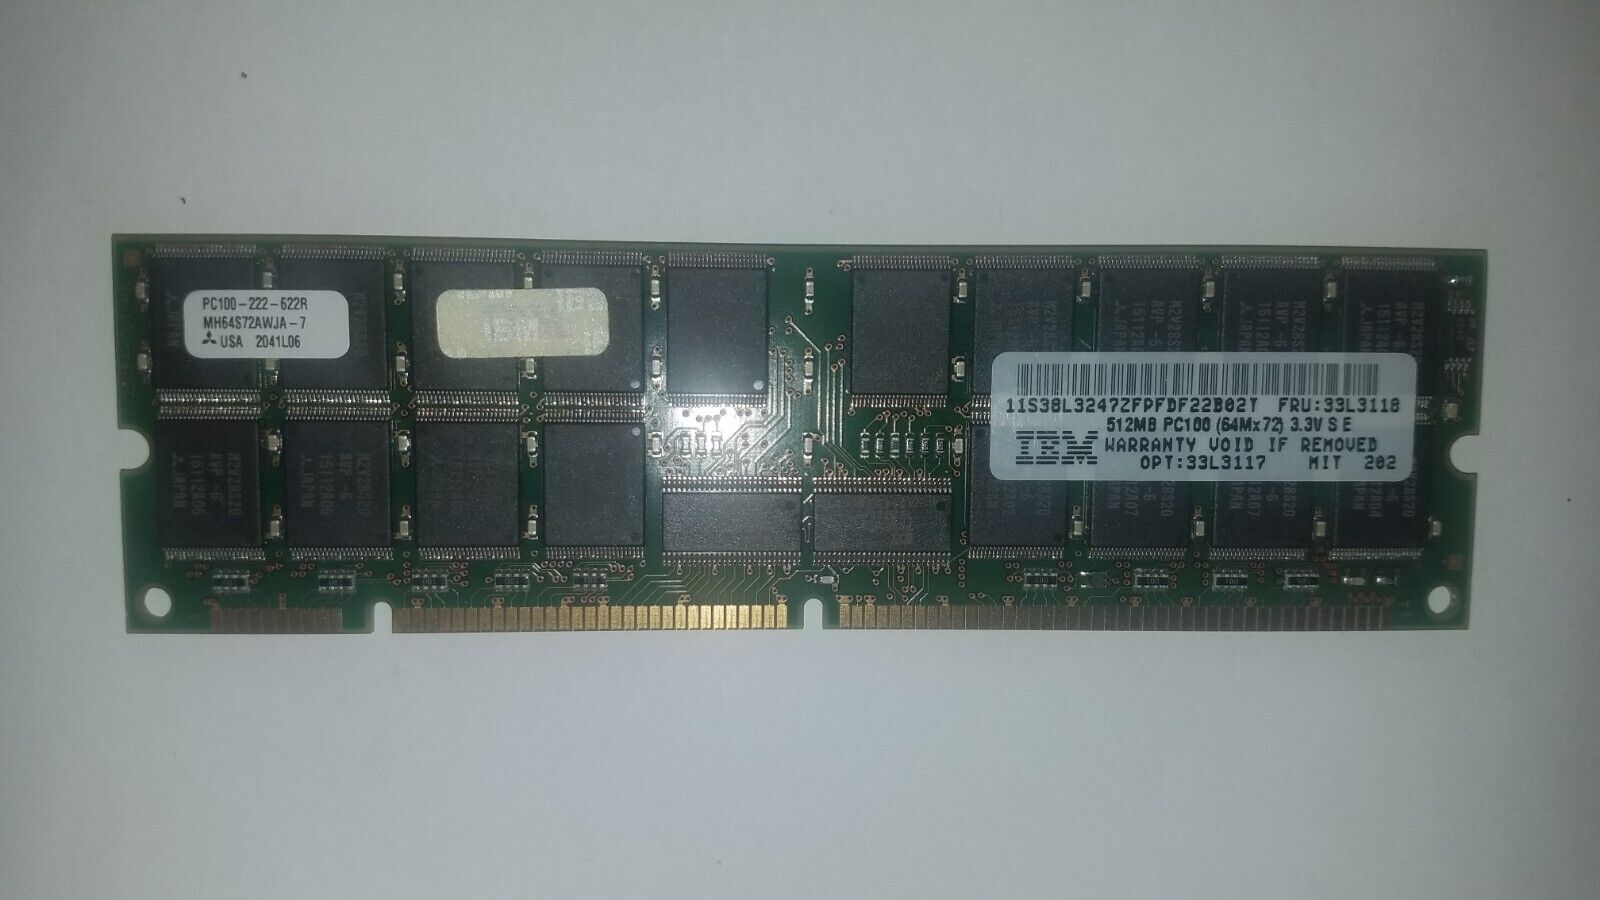 IBM 512MB SDRAM PC100 168PIN ECC REGISTERED 32X4 RDIMM SERVER RAM MH64S72AWJA-7